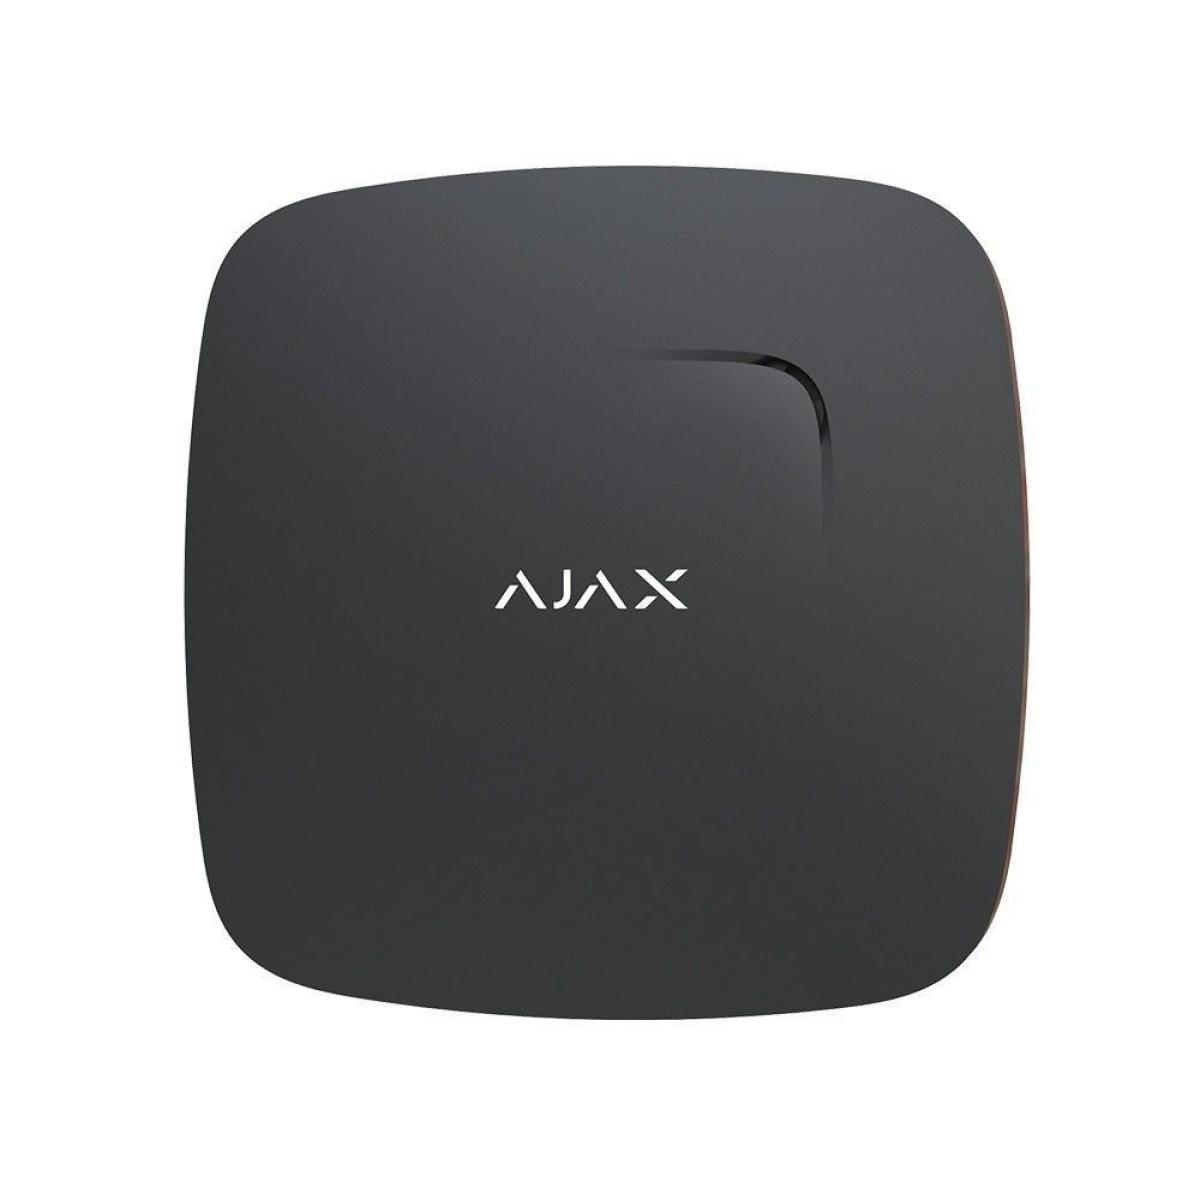 AJAX Fire Protect Wireless smoke and heat detector- Black